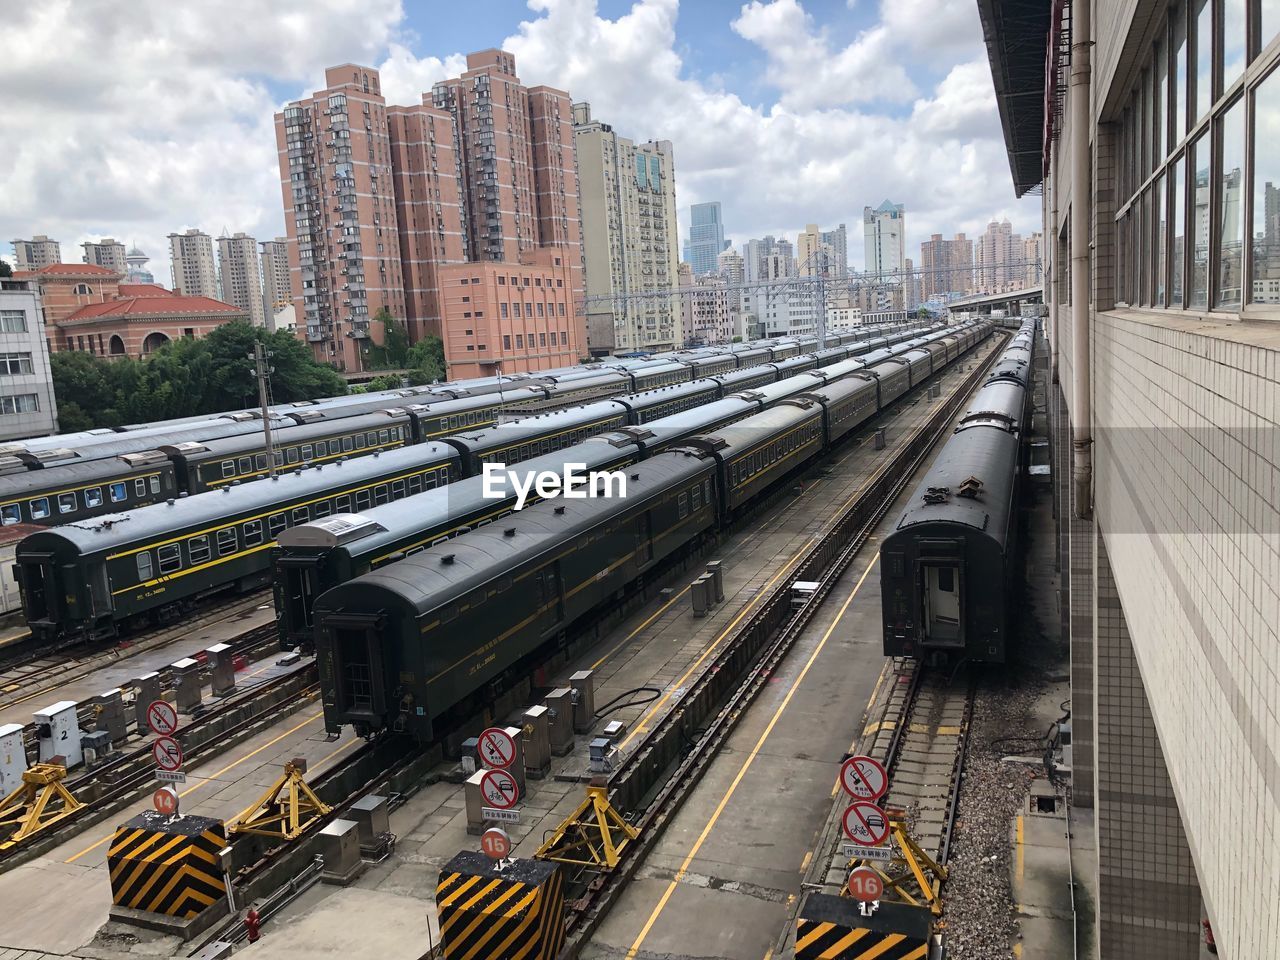 Trains at shunting yard in city